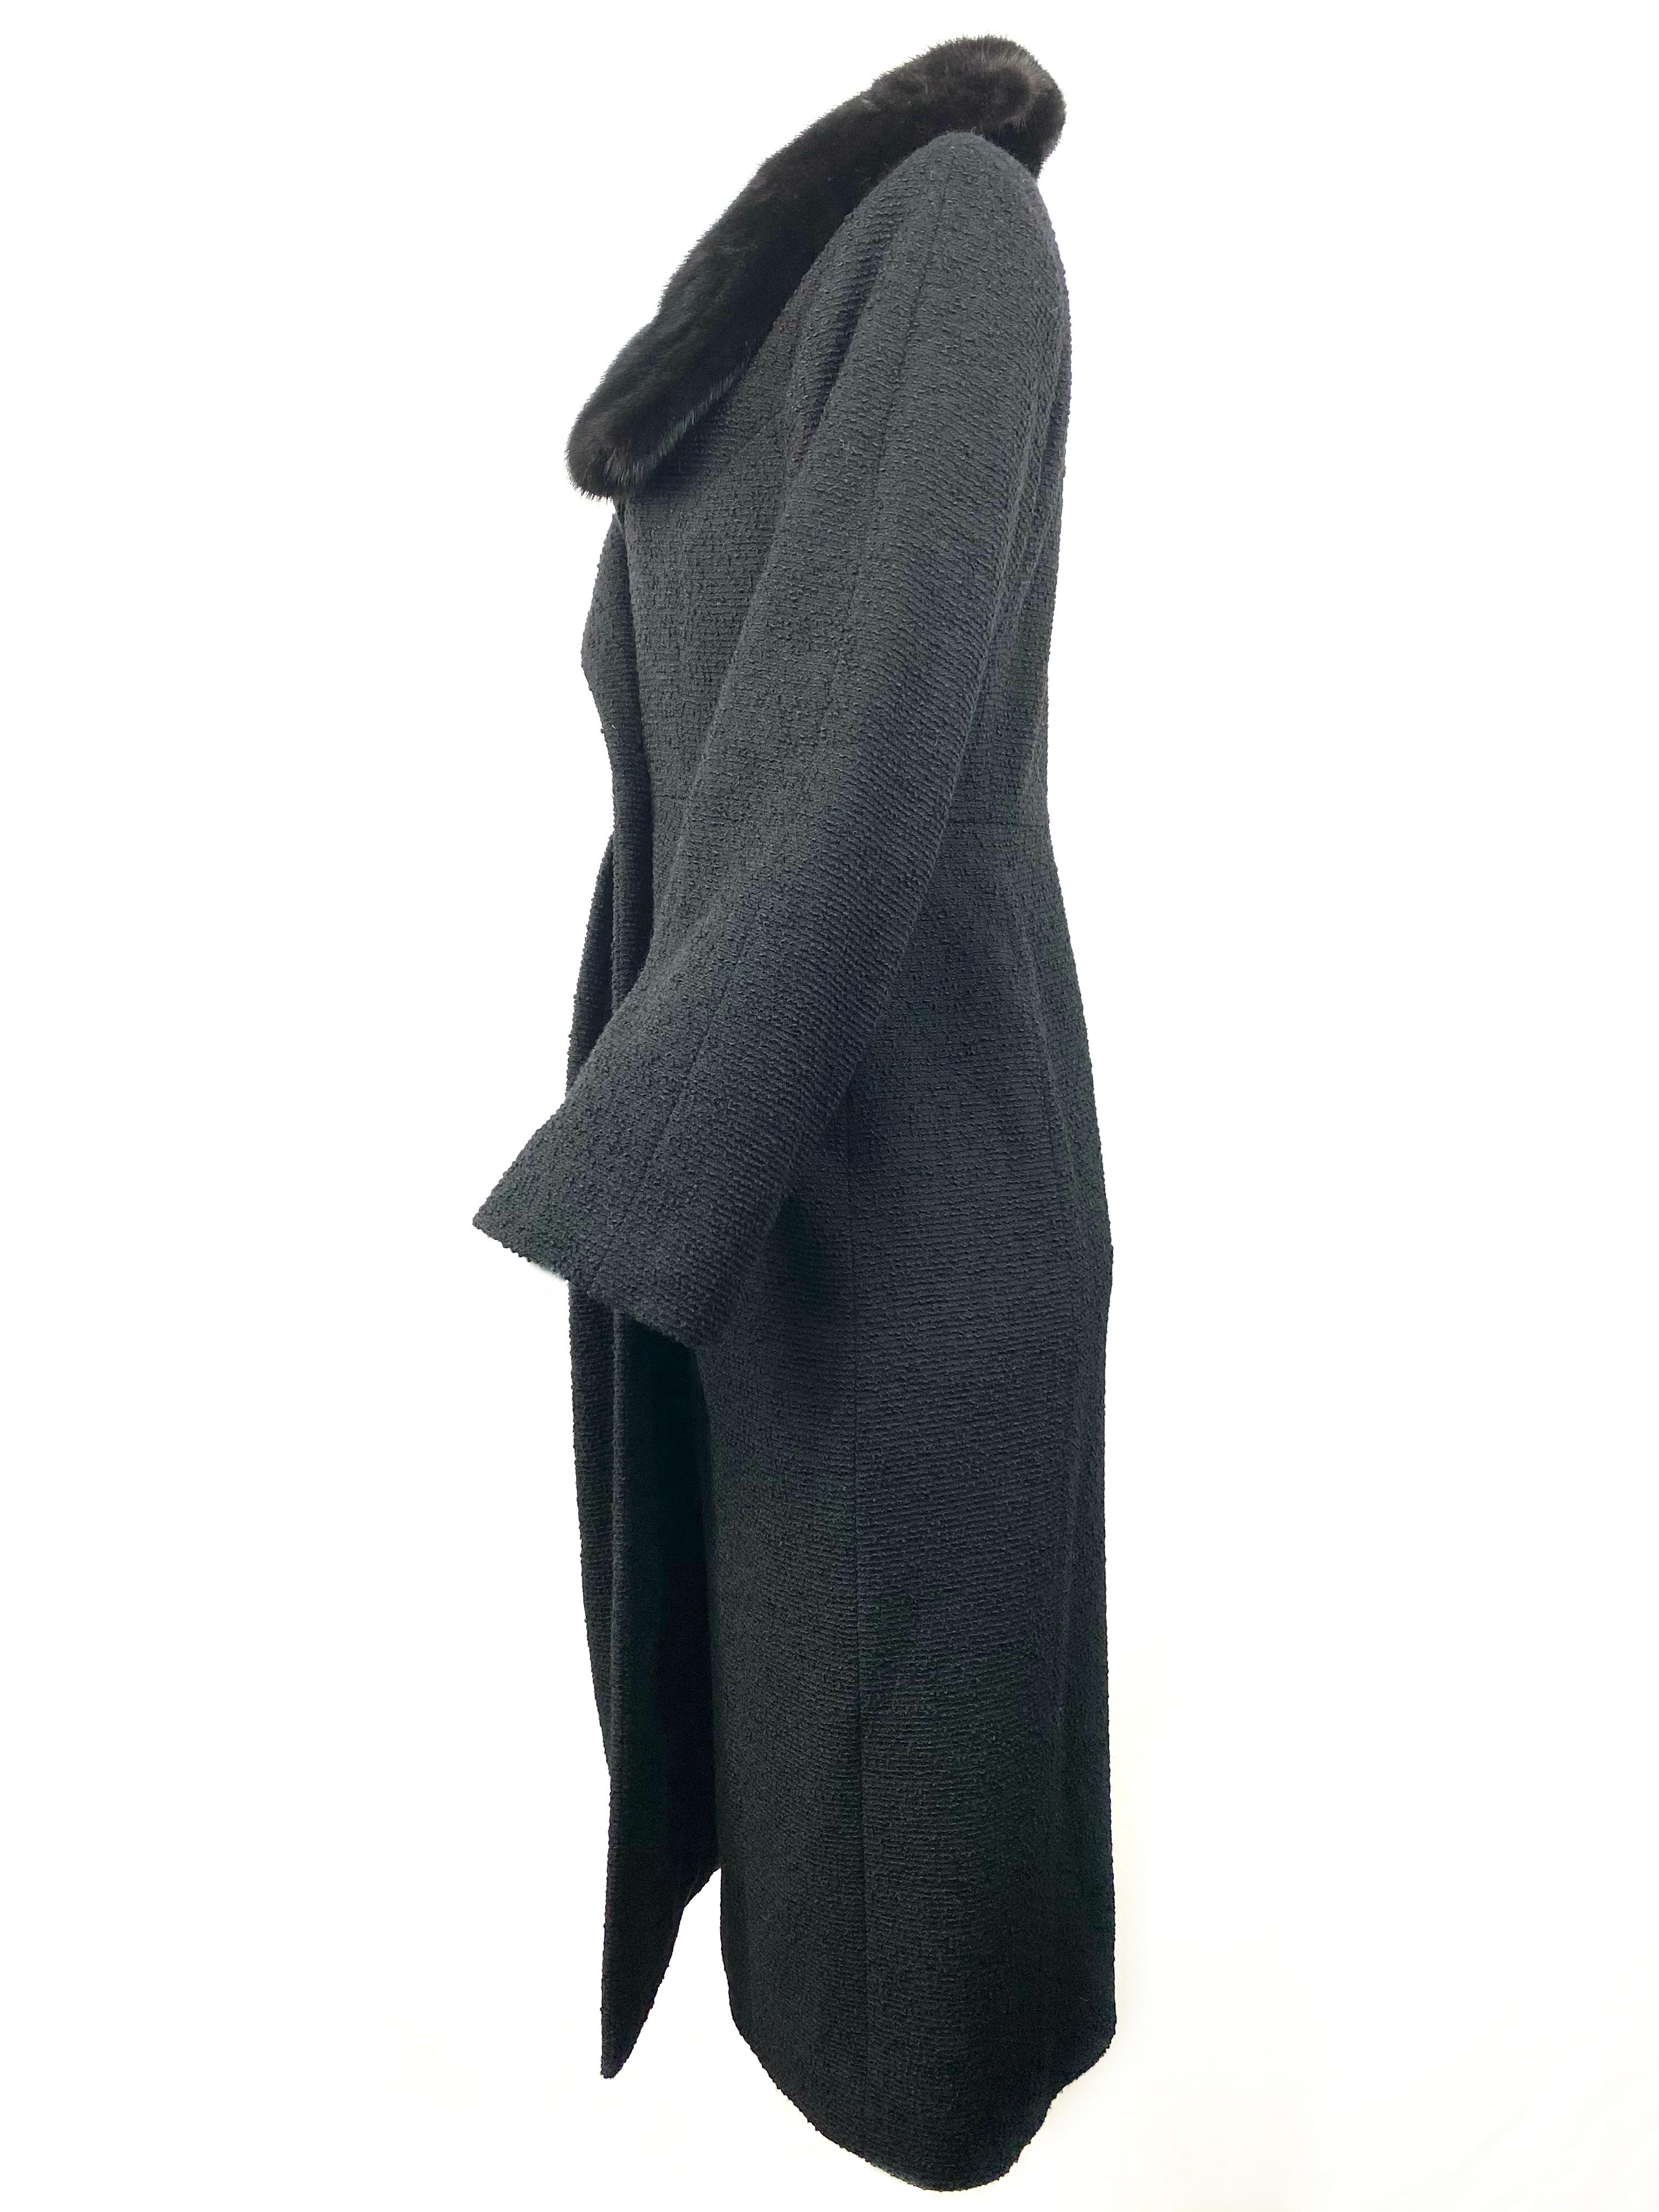 Women's Christian Dior Black Wool Tweed and Fur Coat Jacket Size 40